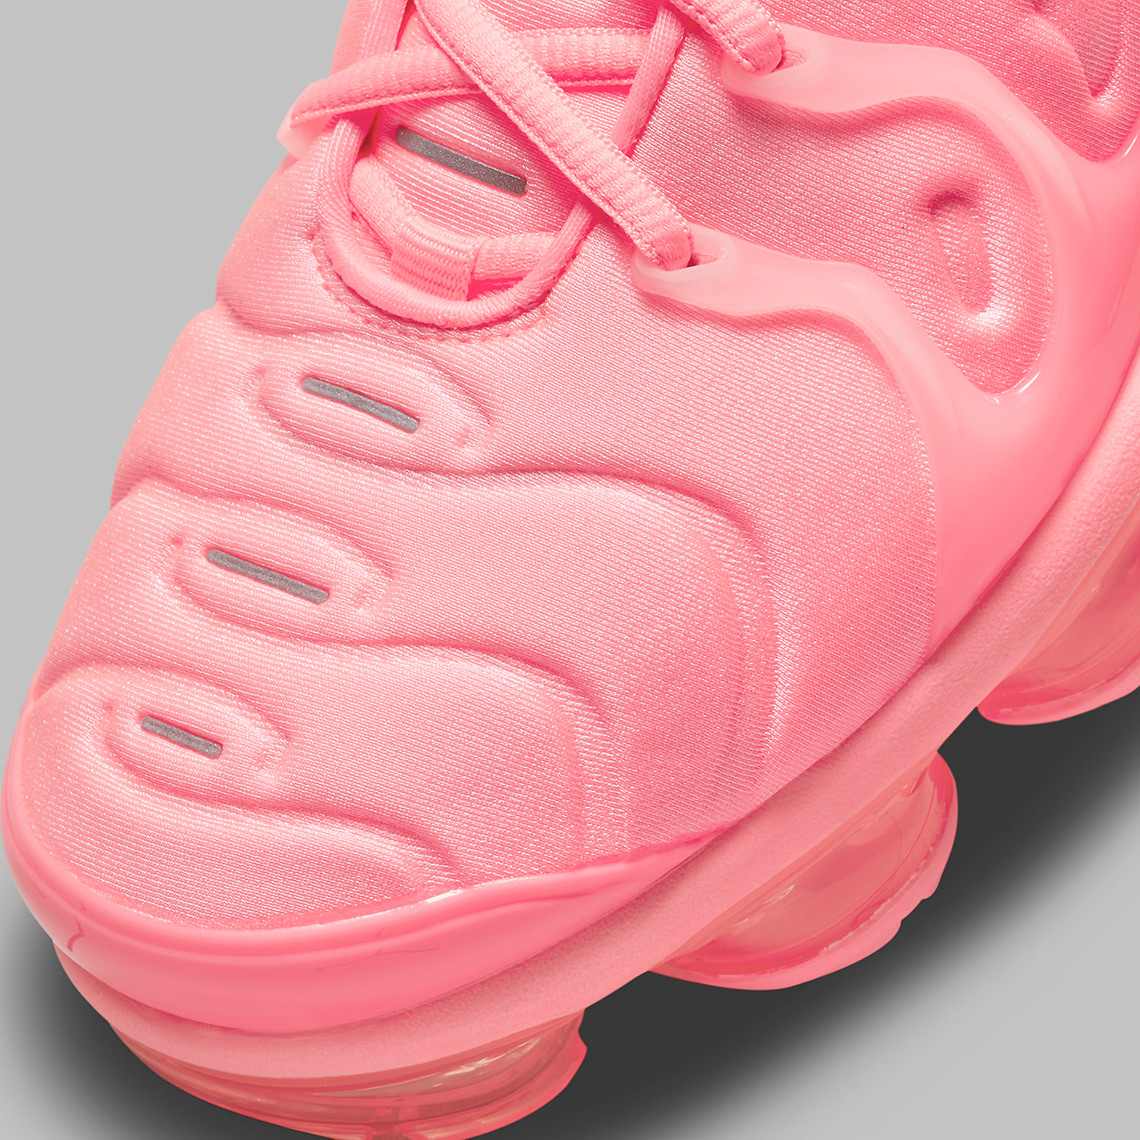 bubble gum pink nikes